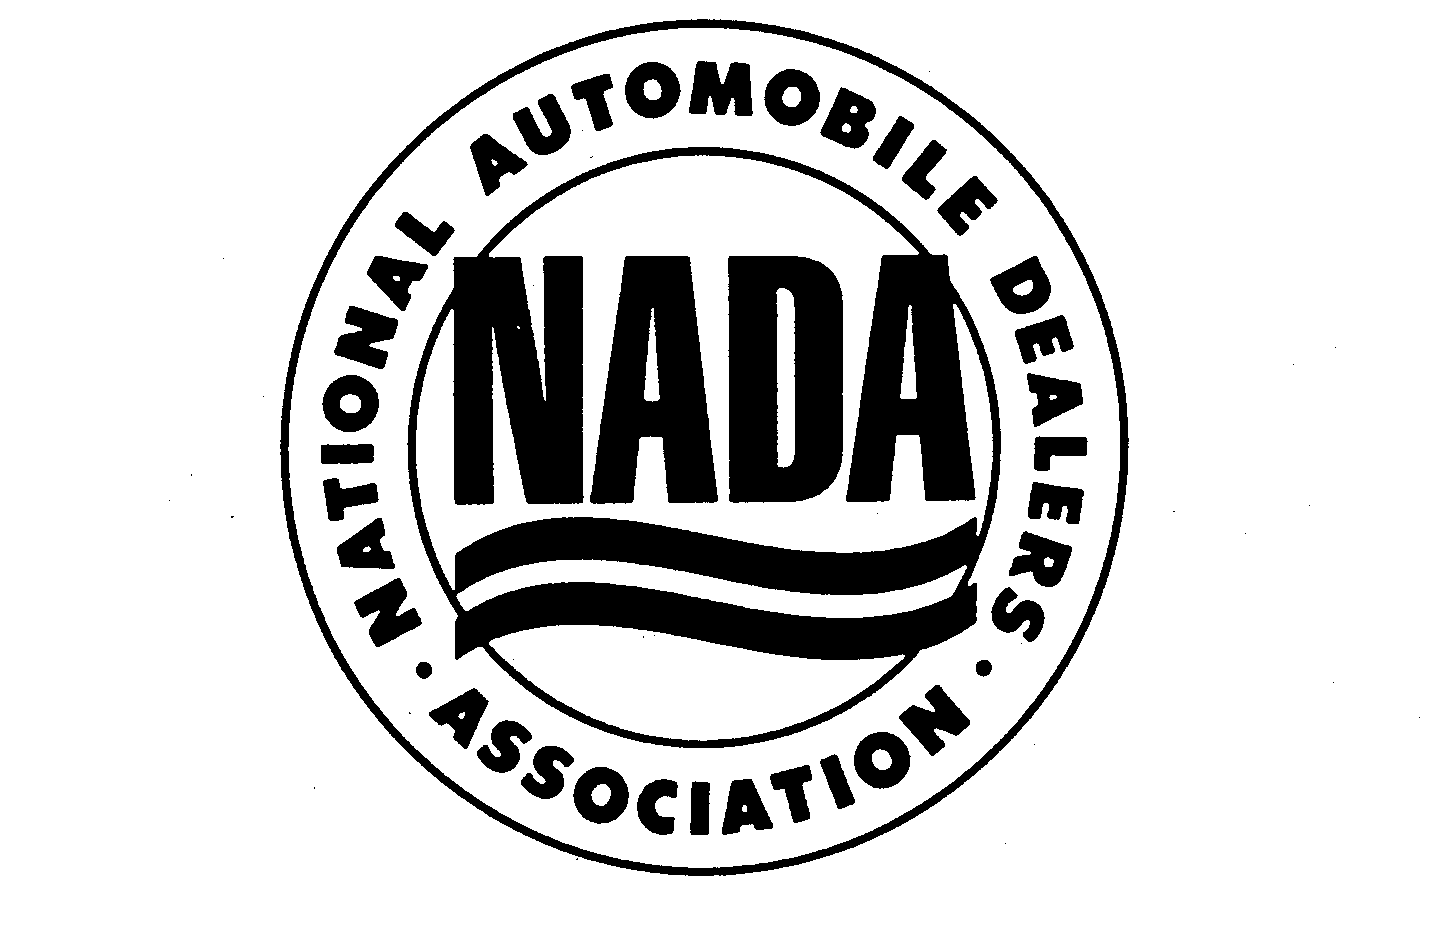  NADA NATIONAL AUTOMOBILE ASSOCIATION DEALERS